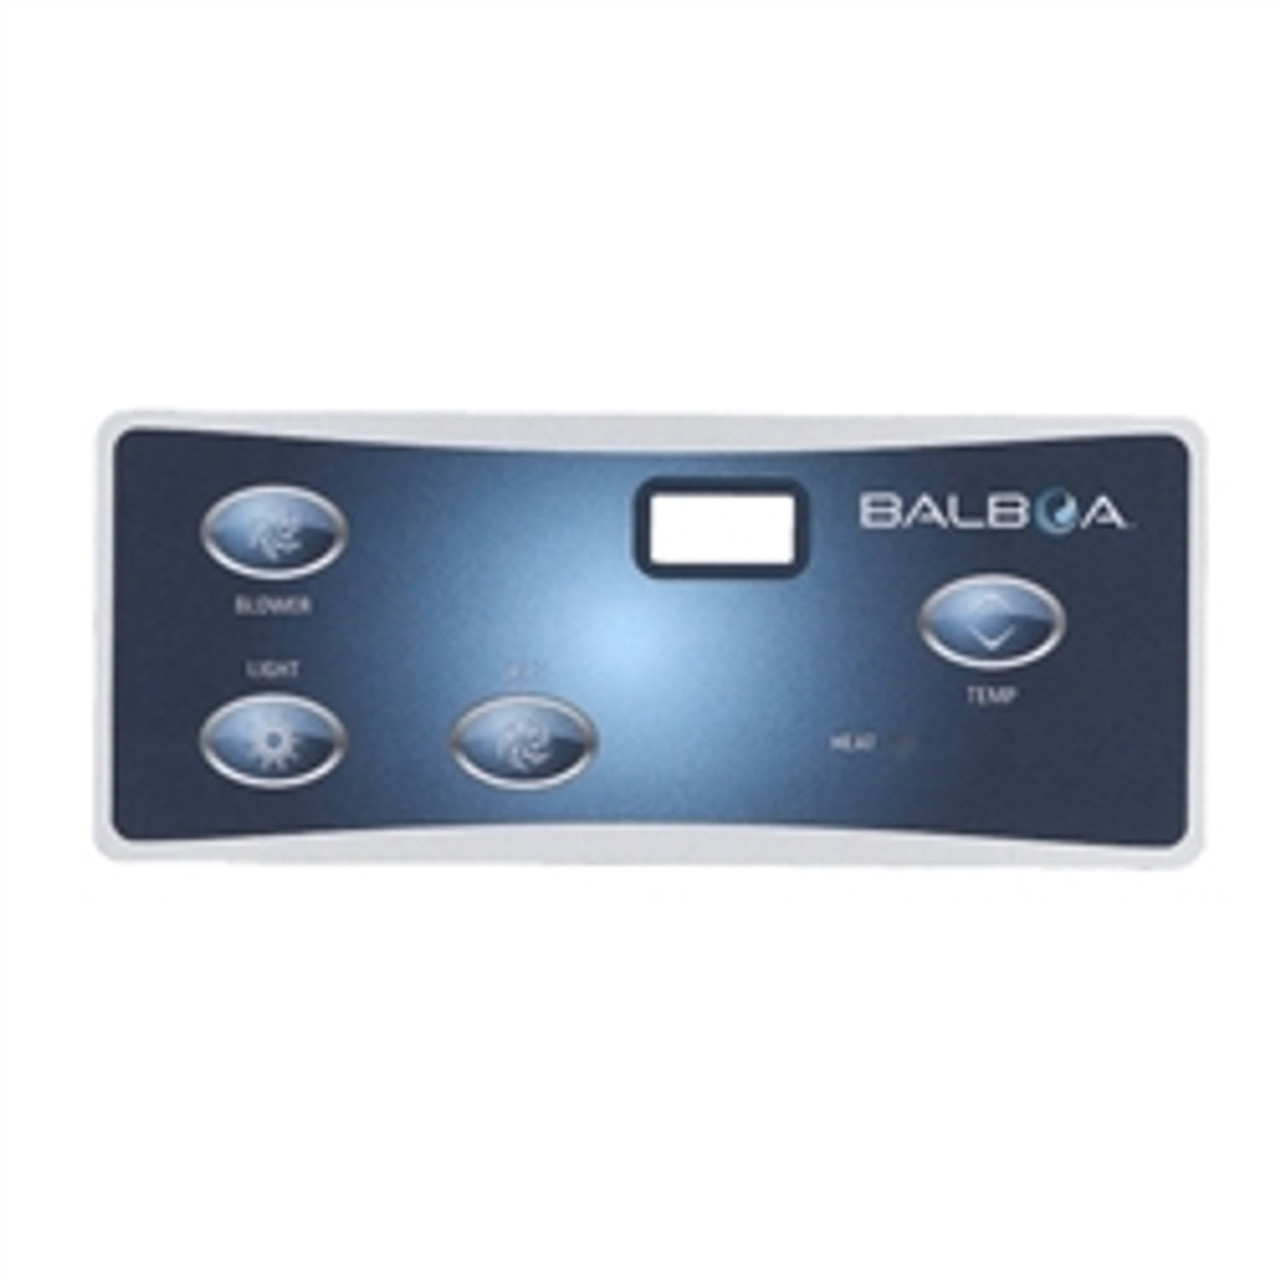 Balboa Overlay - VL402 / Digital Duplex, 4 Button, LCD, 10668